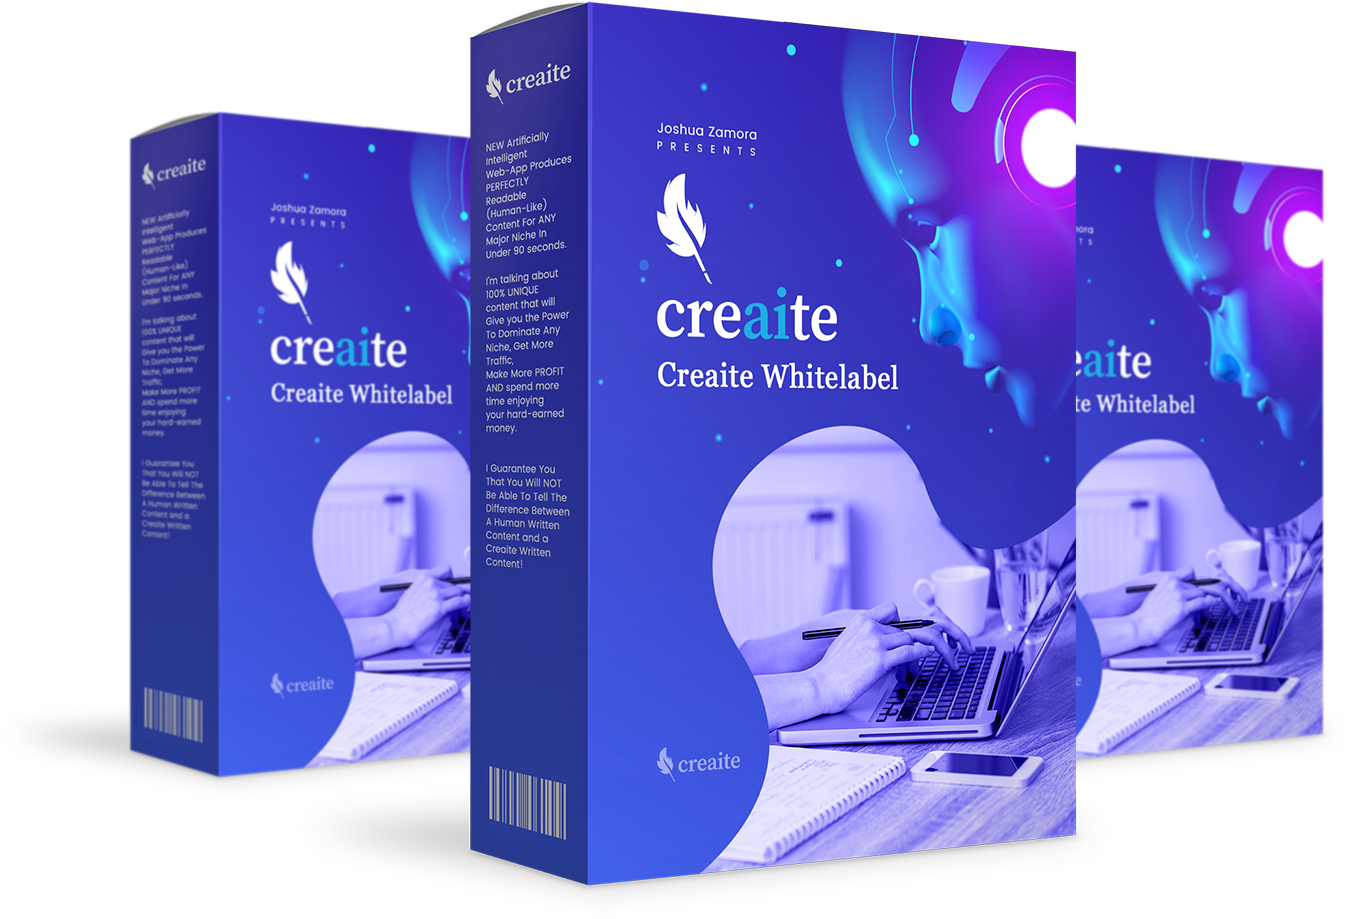 Creaite White Label Review Page Concept